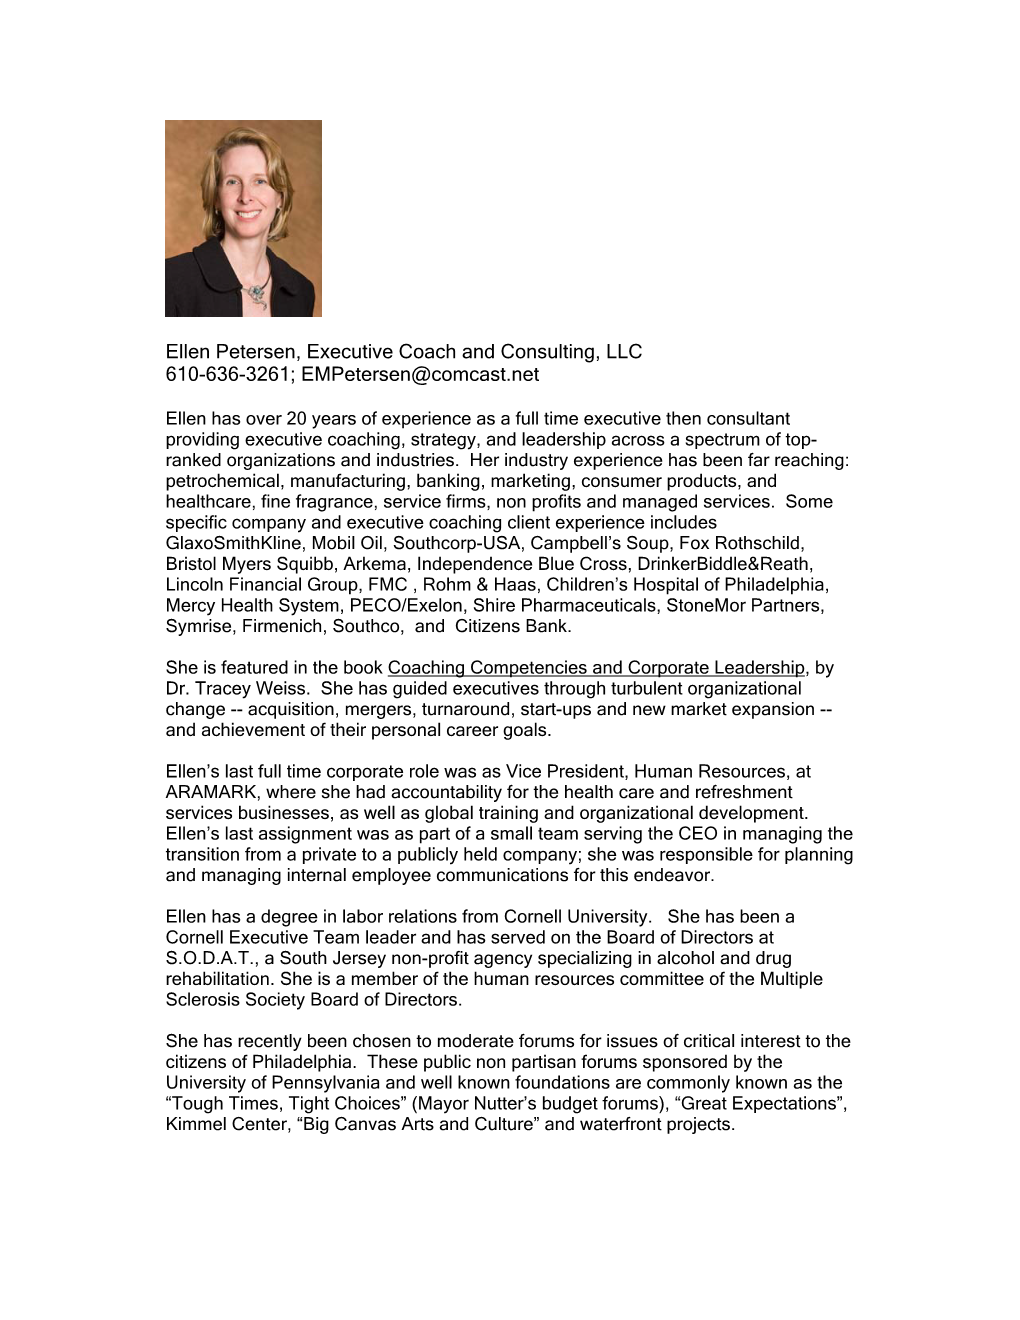 Ellen Petersen, Executive Coach and Consulting, LLC 610-636-3261; Empetersen@Comcast.Net